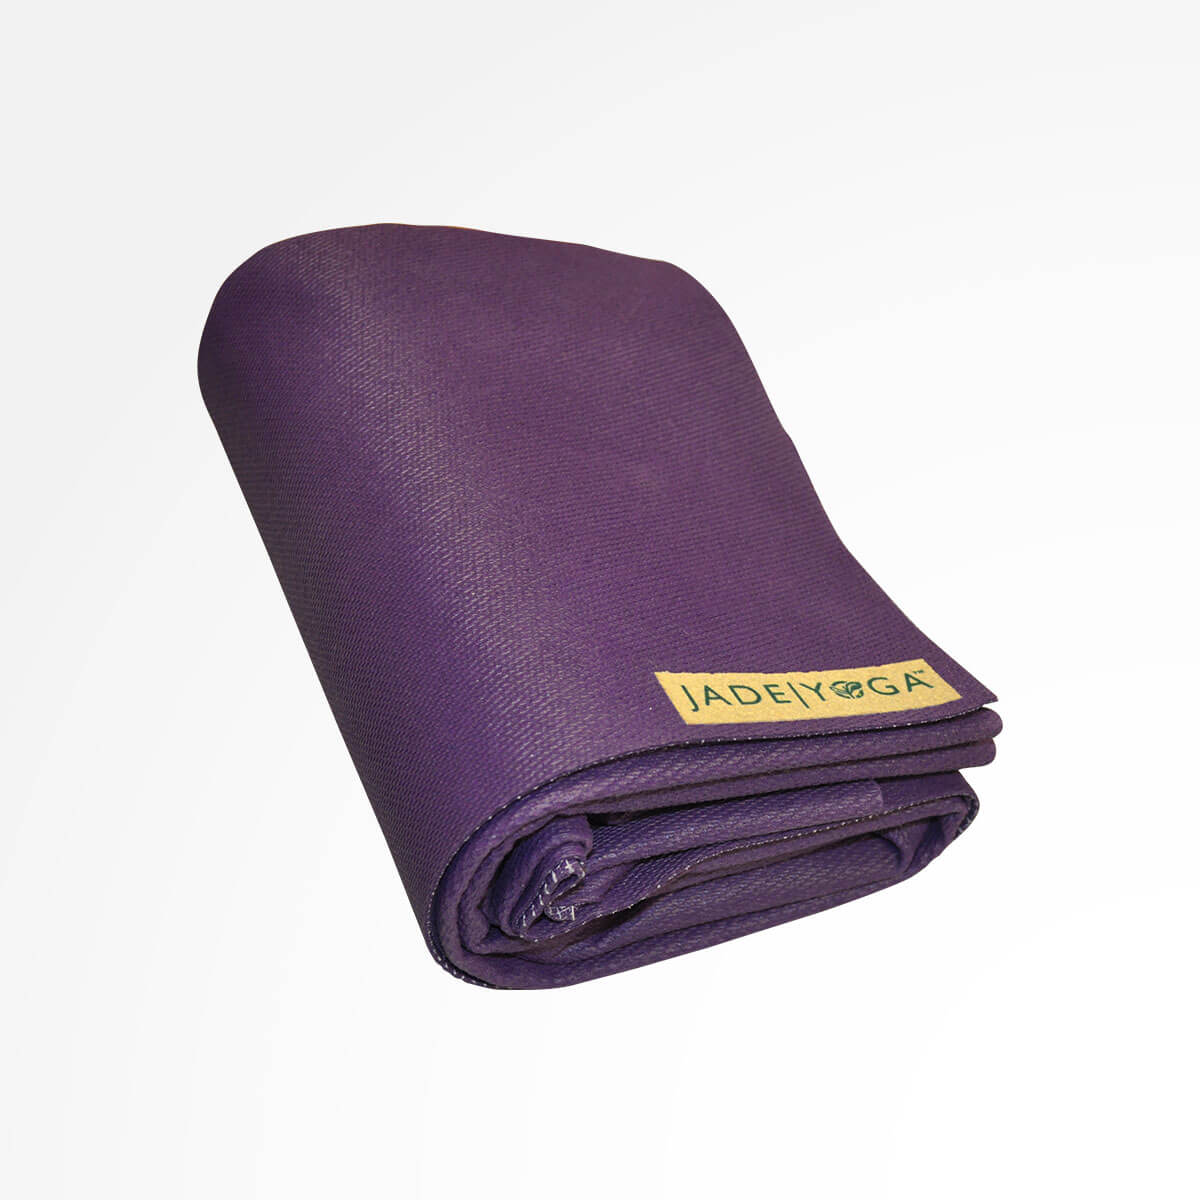 Jade Voyager 68'' Yoga Mat 1.6mm - Purple